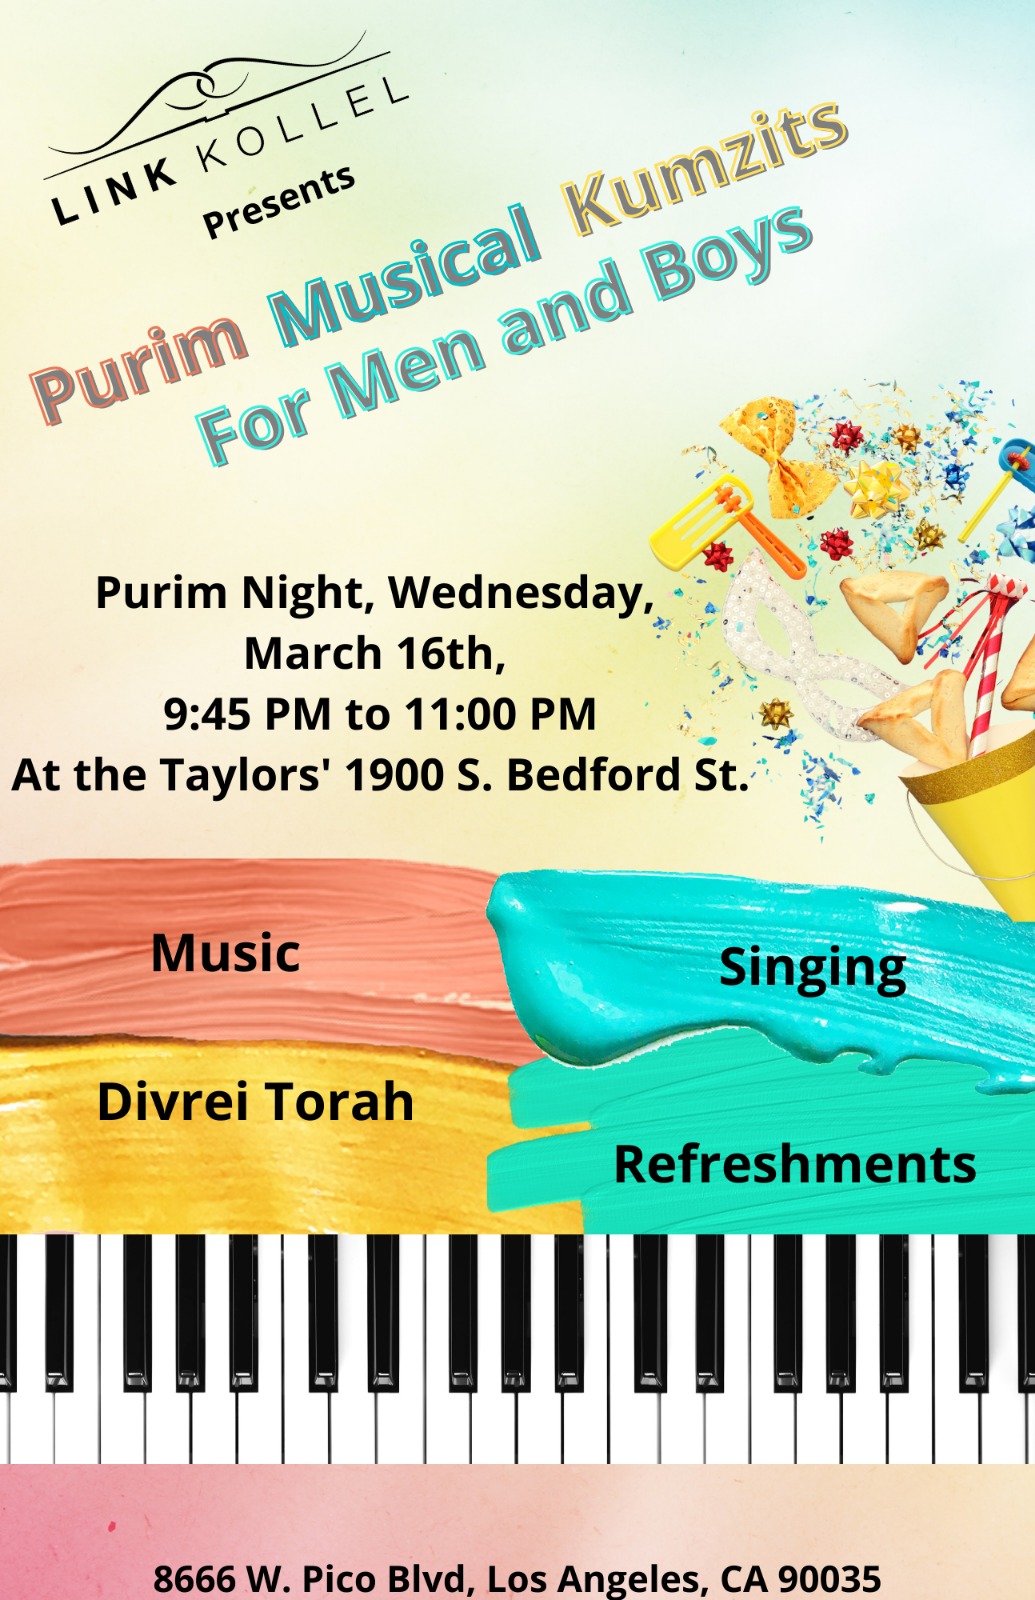 Purim Musical Kumzitz - LINK Kollel community